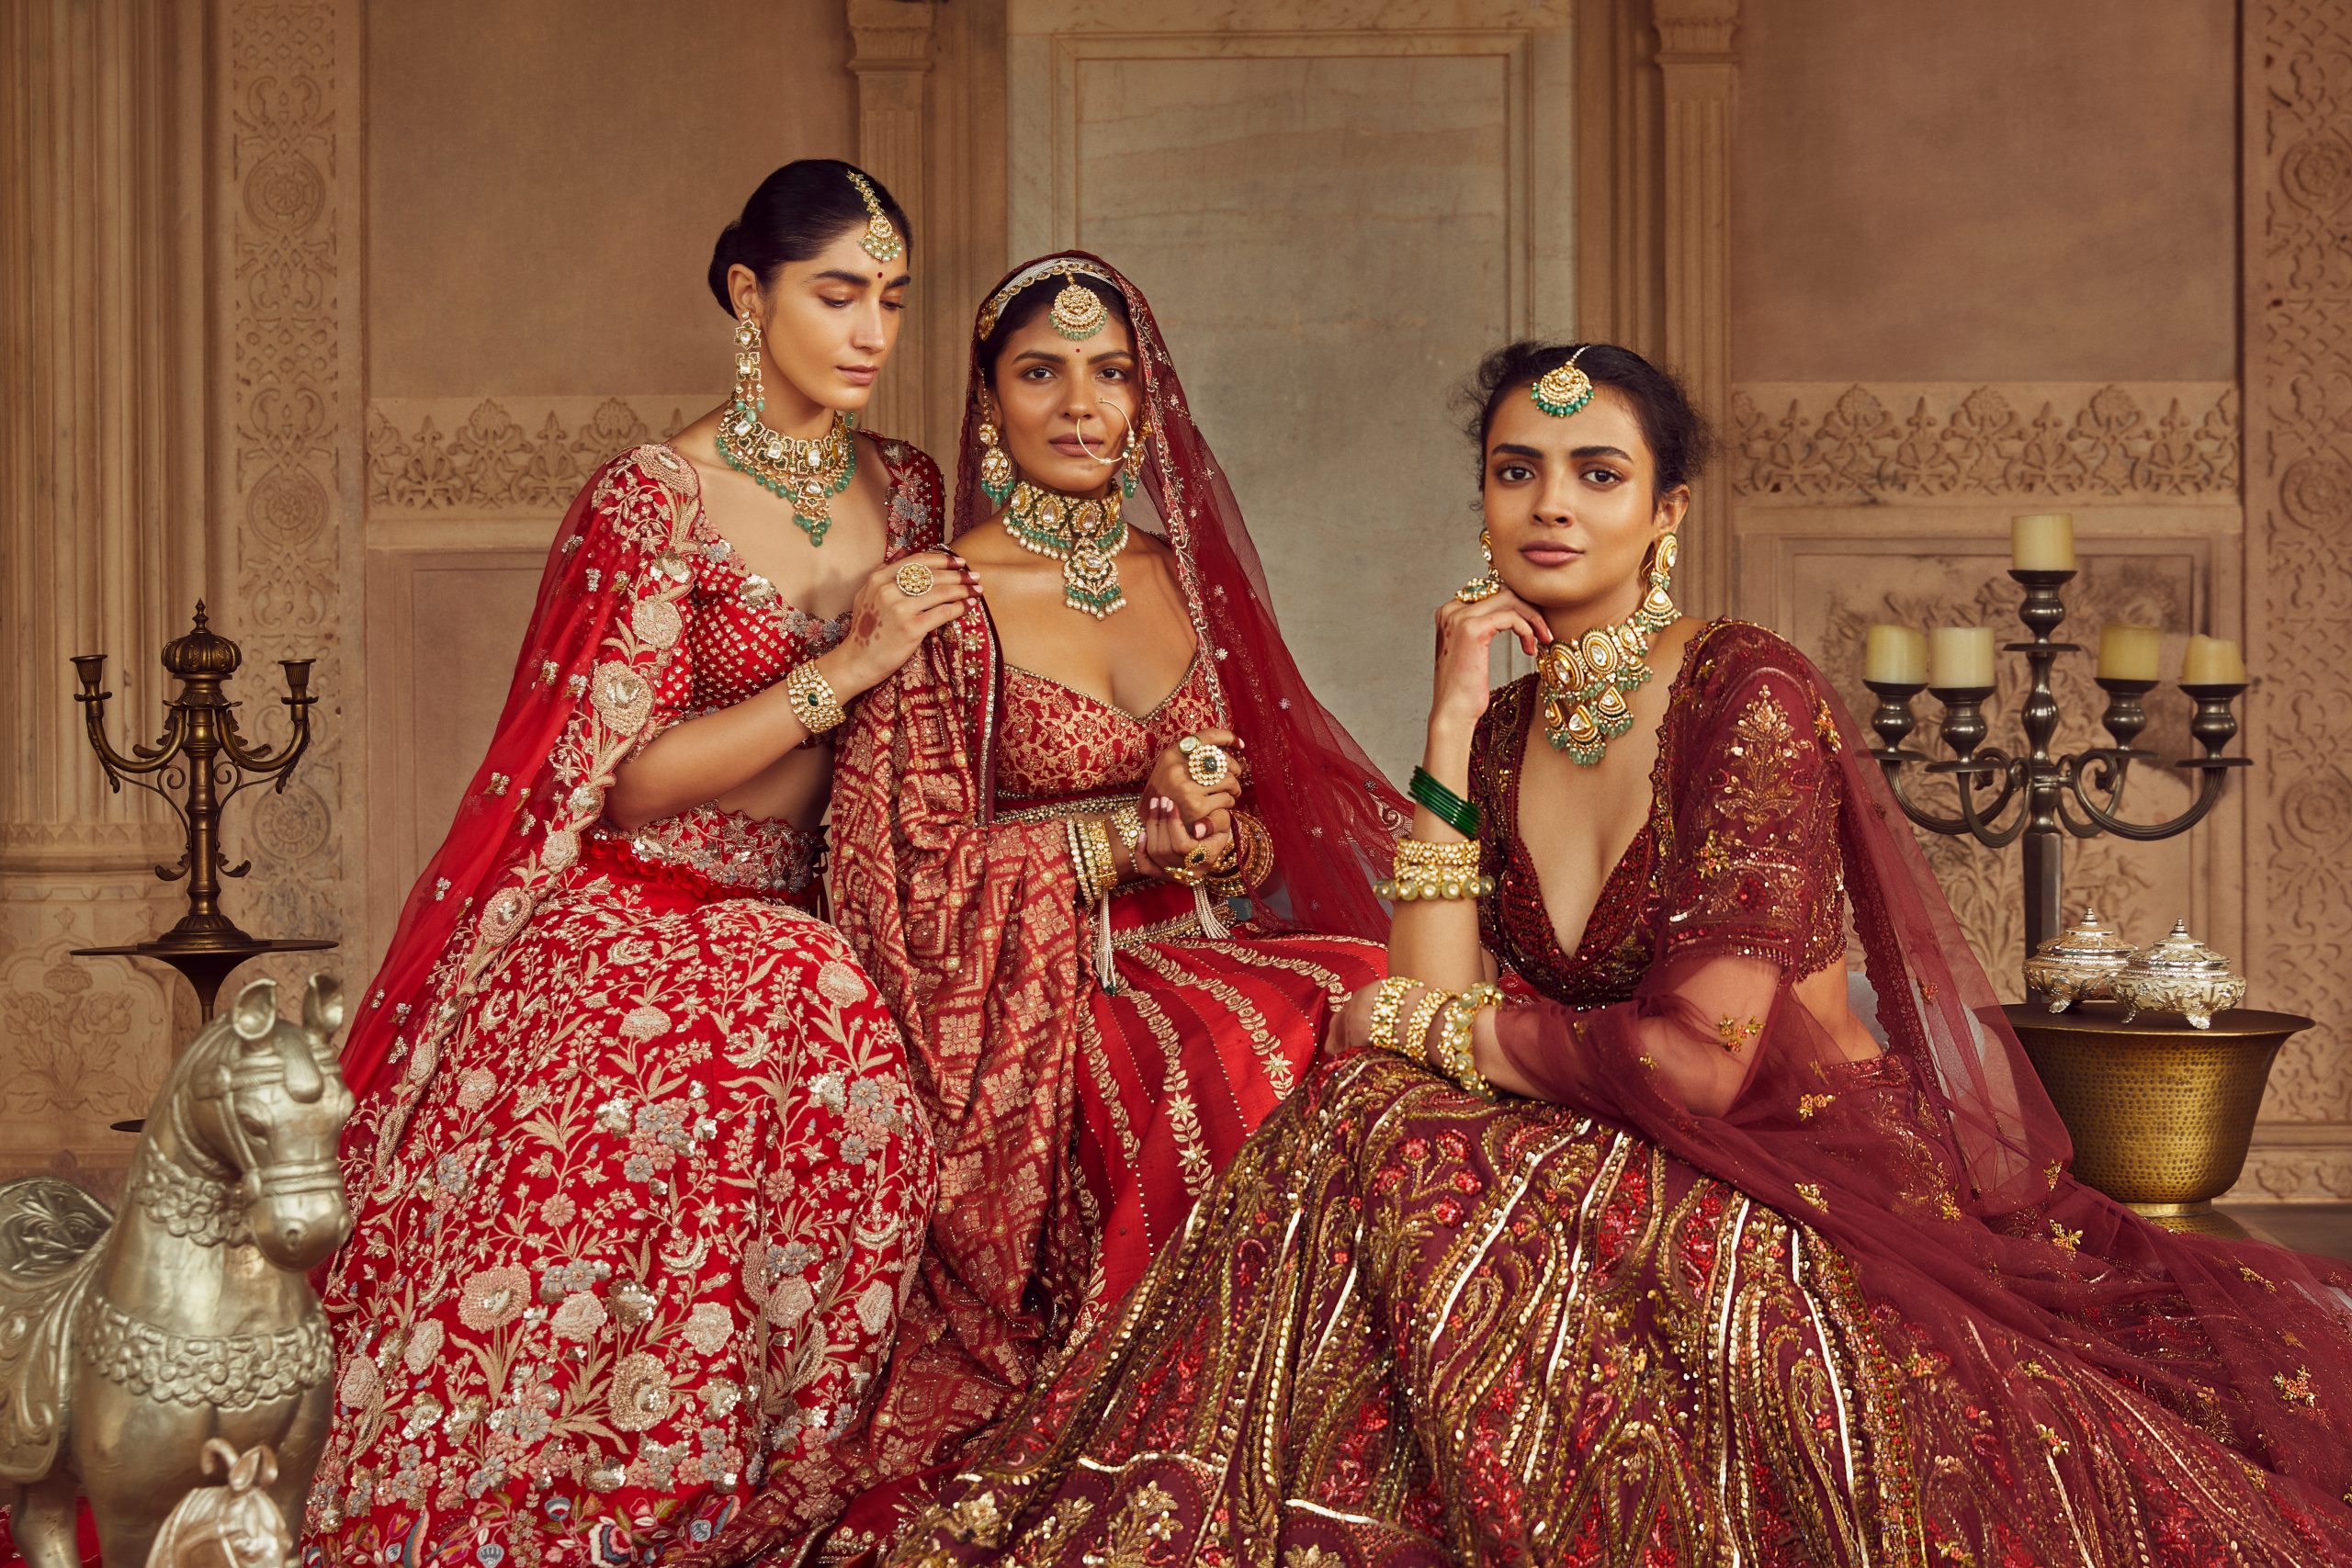 Design to inspire, legacy to celebrate - Raniwala Jewellers